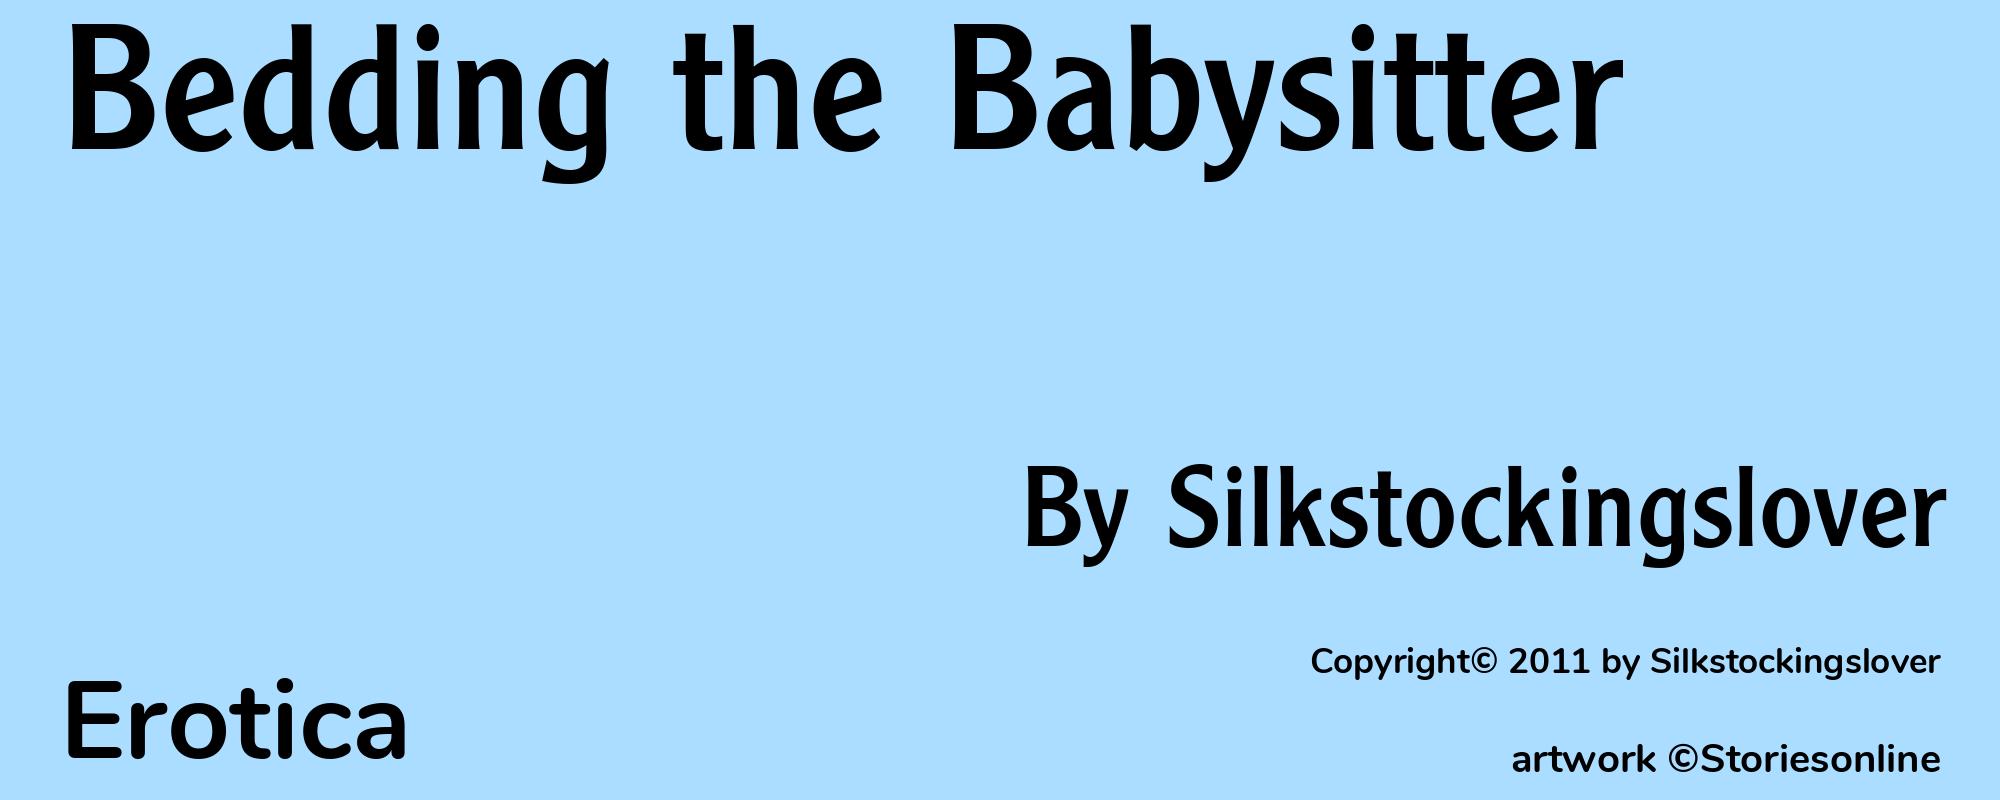 Bedding the Babysitter - Cover